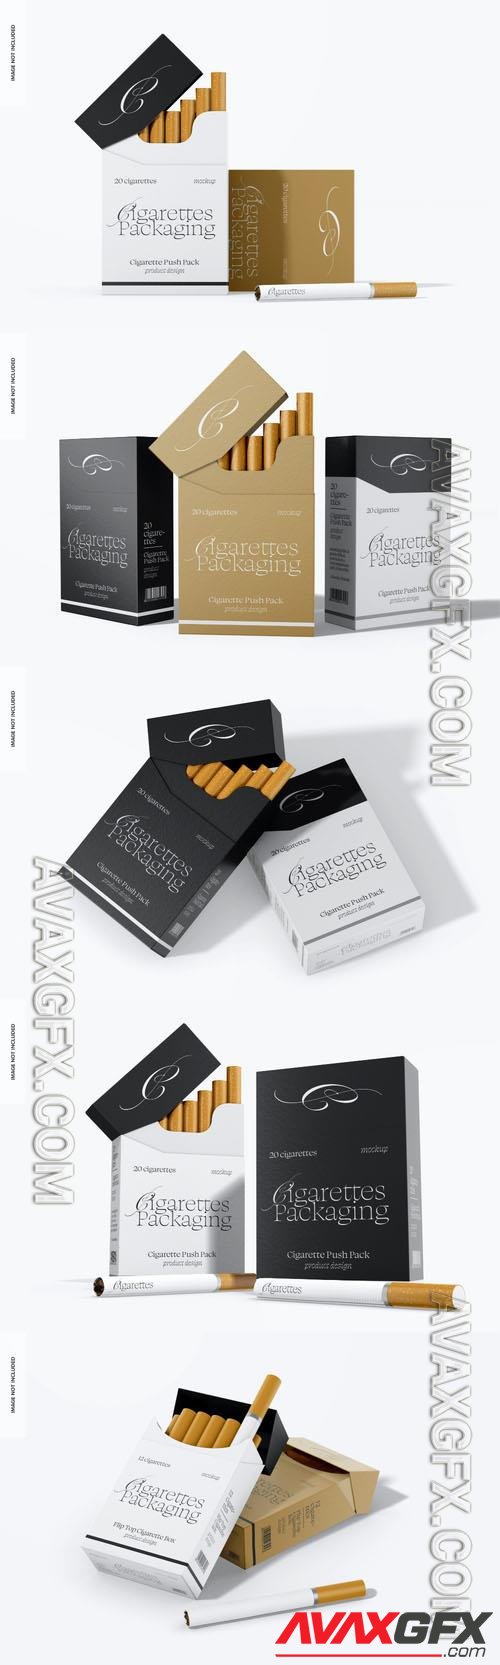 Cigarette push pack psd template mockup [PSD]